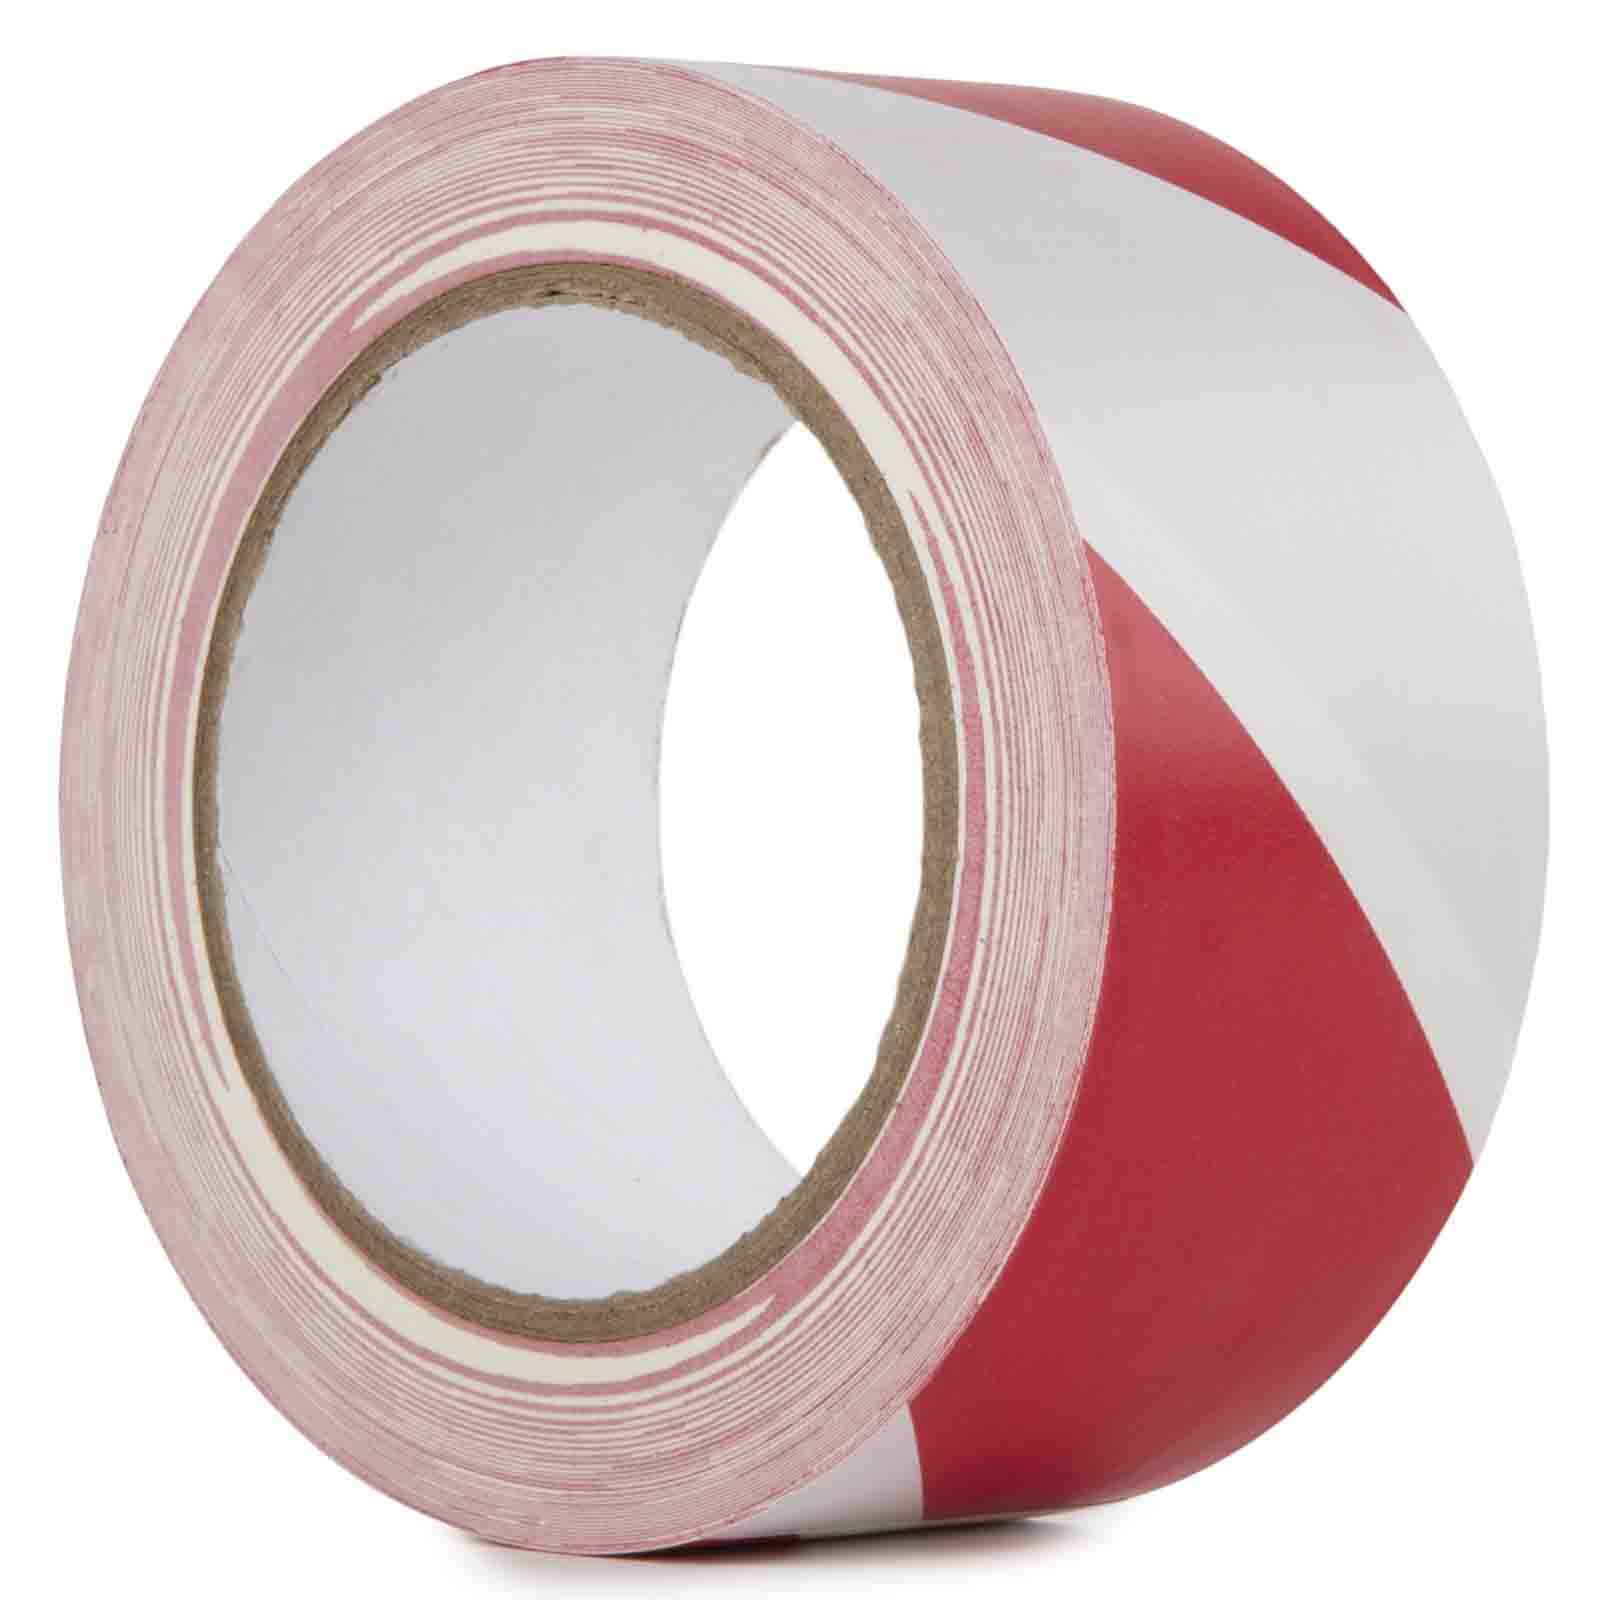 Le Mark Hazard Warning PVC Tape red/white